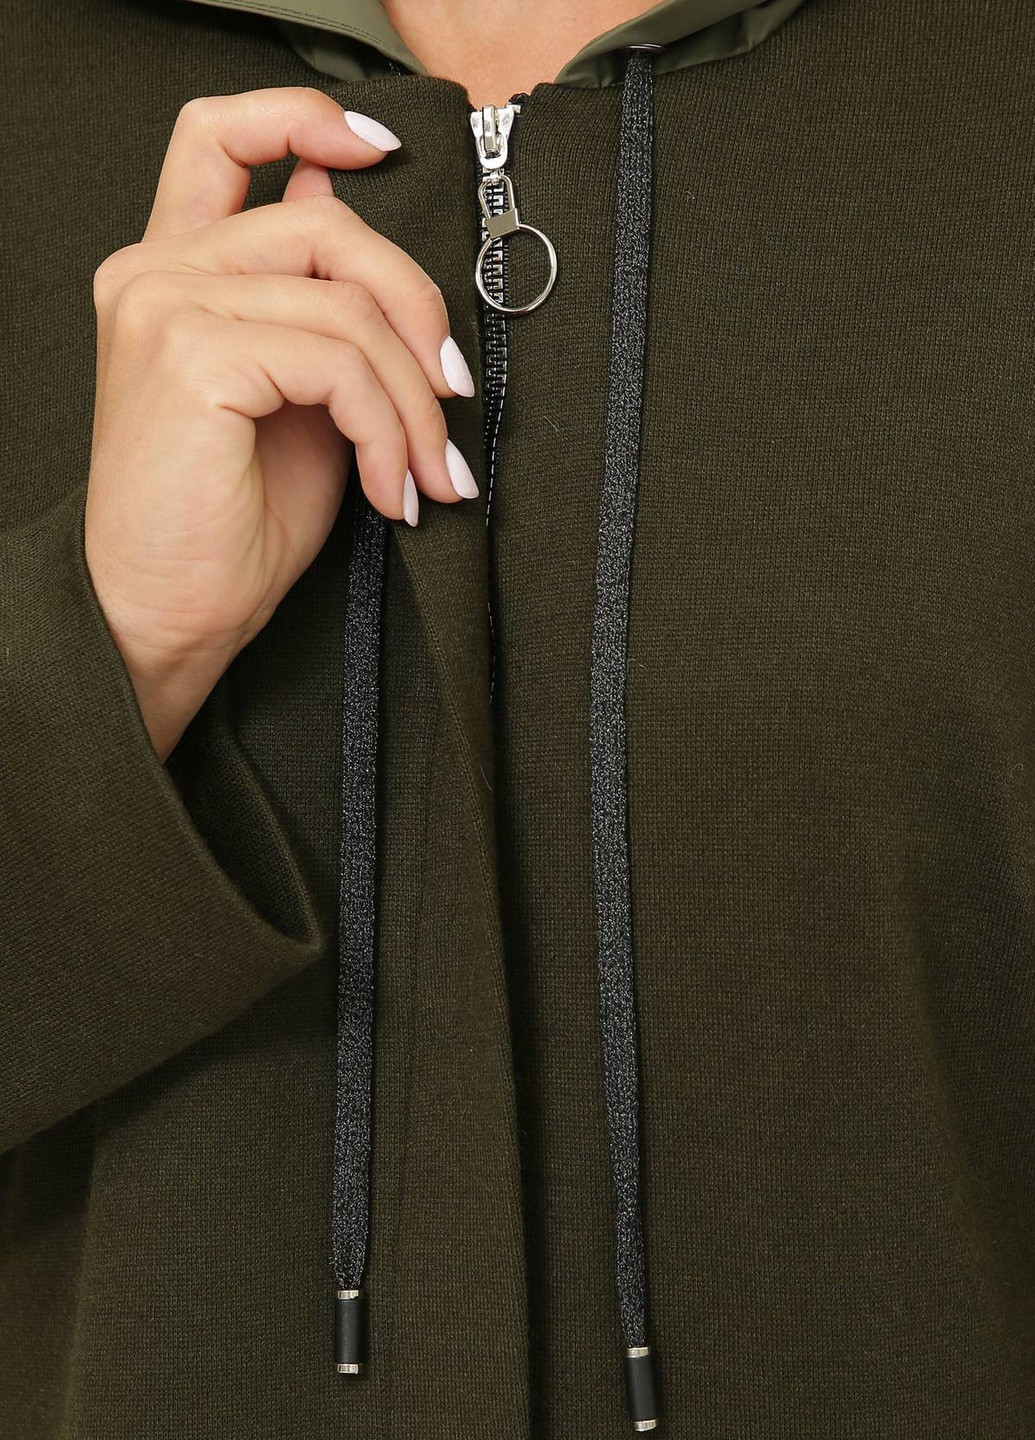 Оливковая (хаки) зимняя легкая куртка из ангоры санти хаки Tatiana